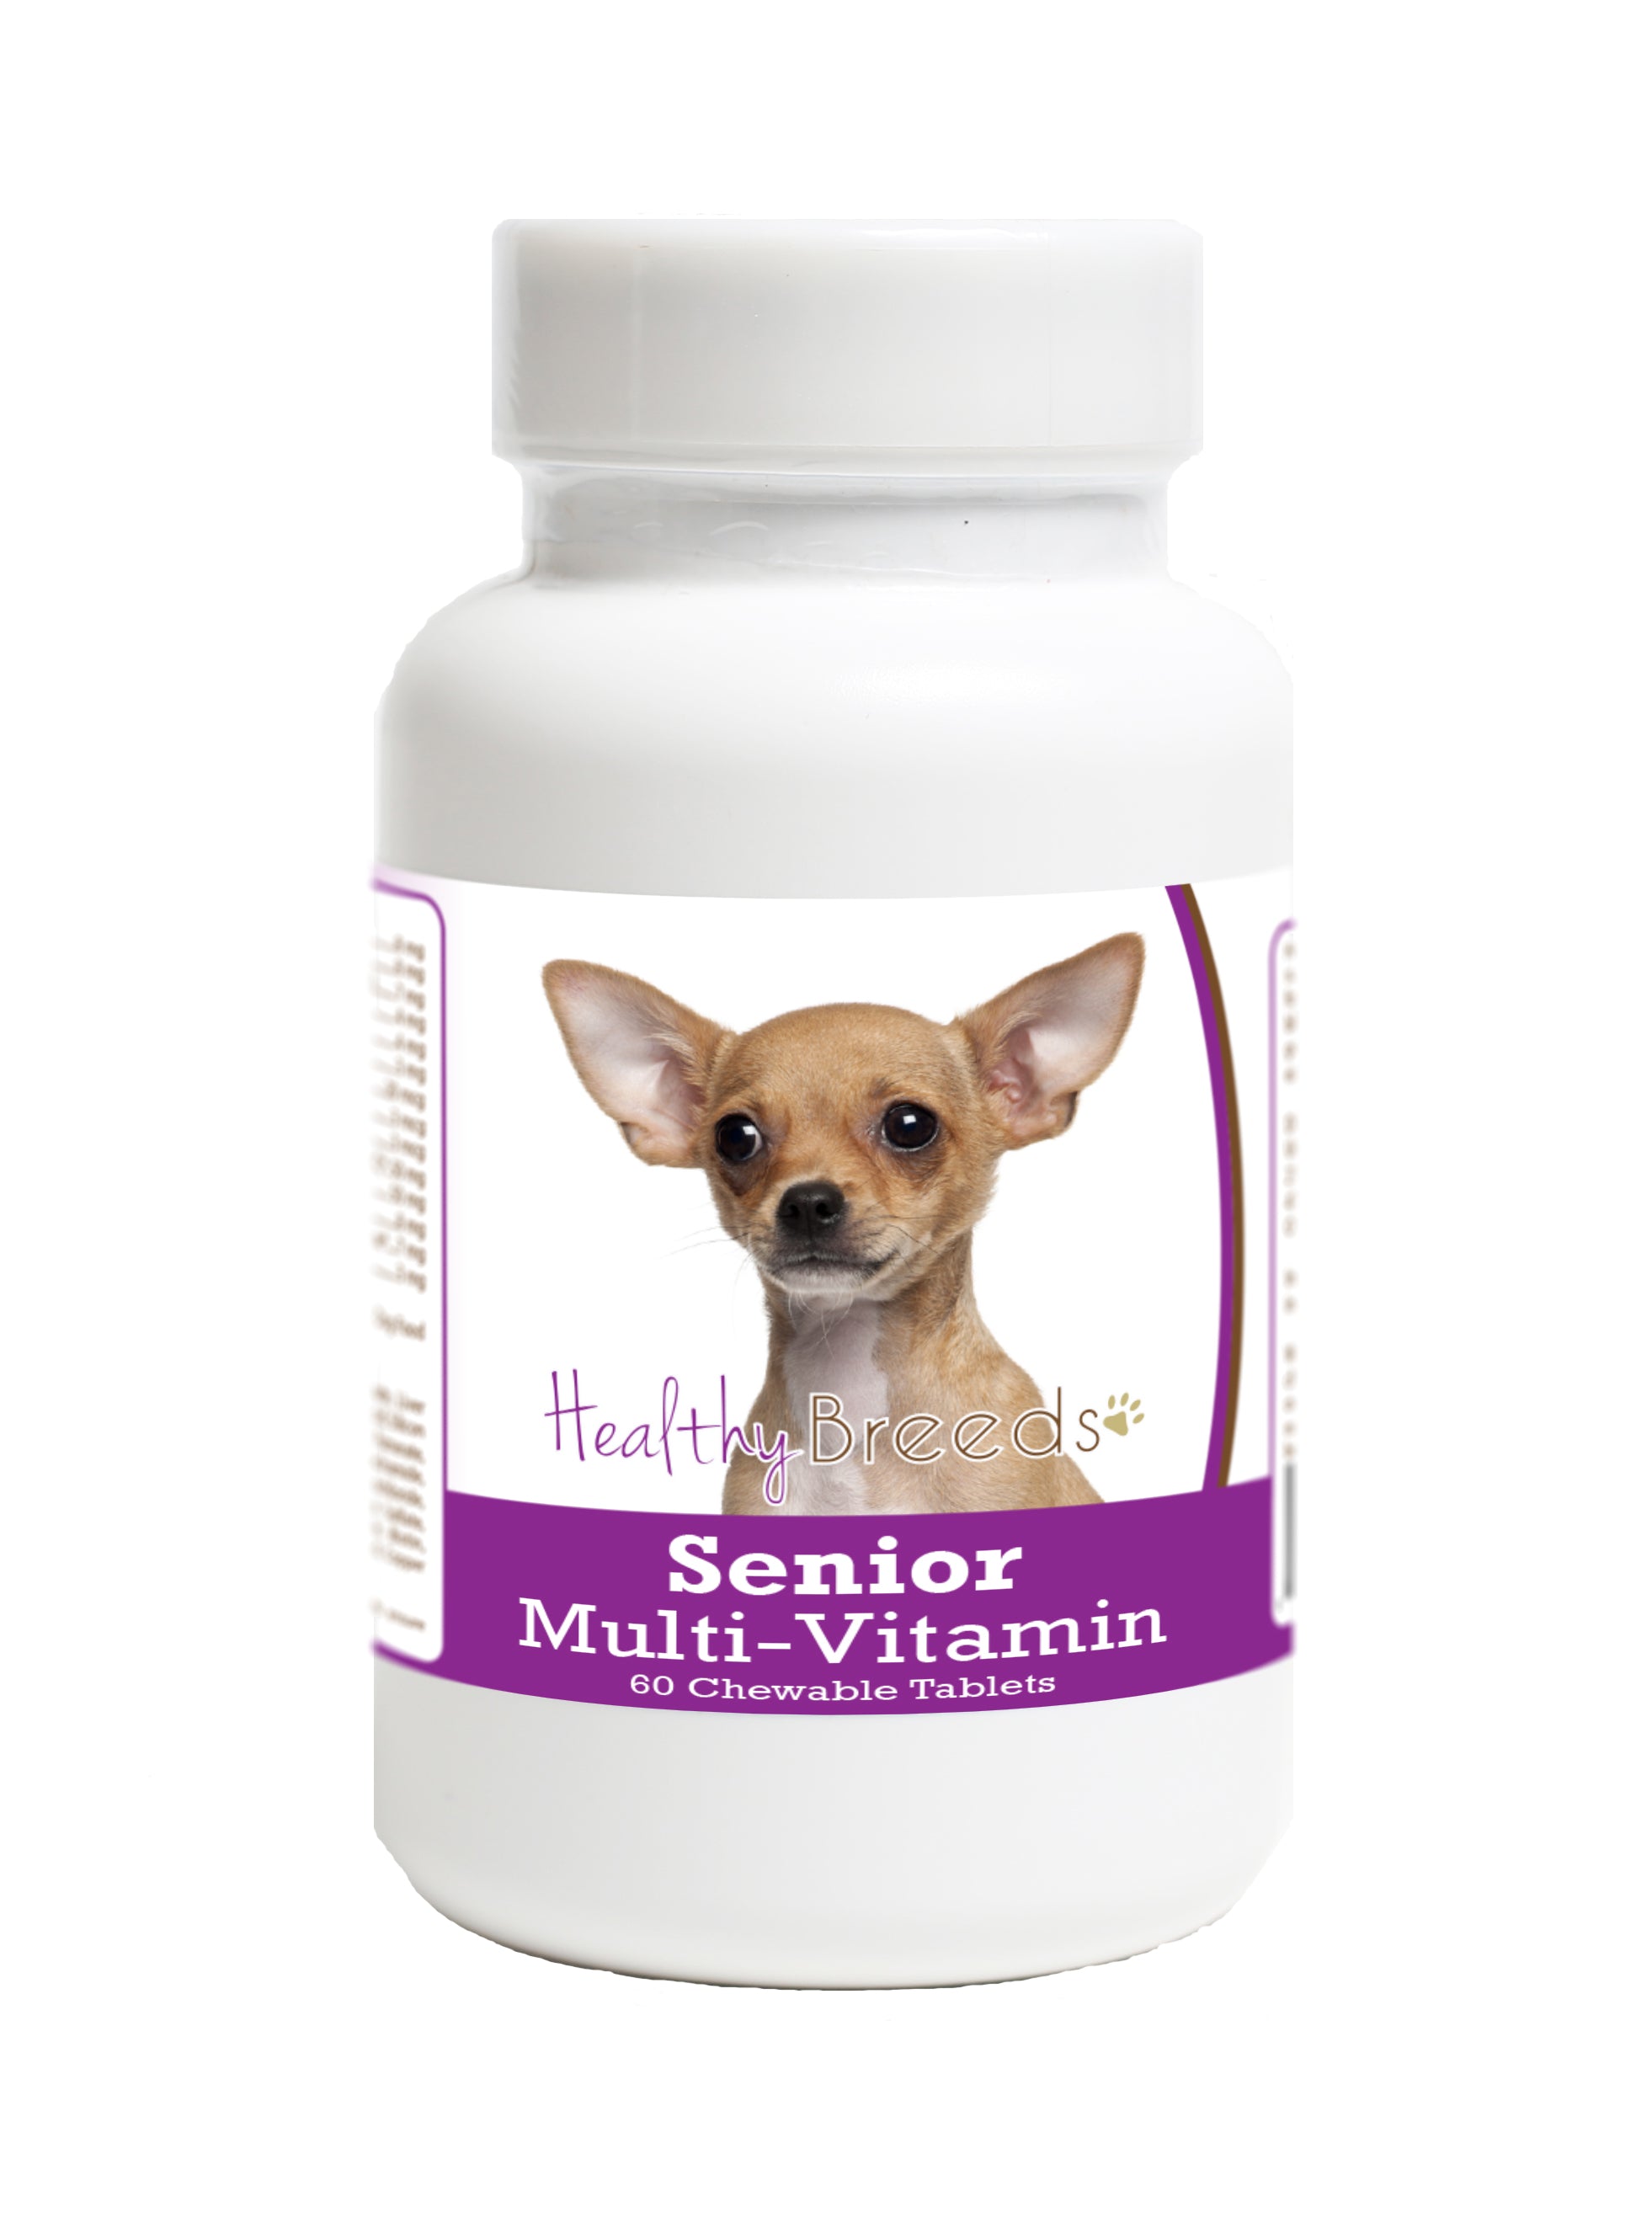 Chihuahua Senior Dog Multivitamin Tablets 60 Count